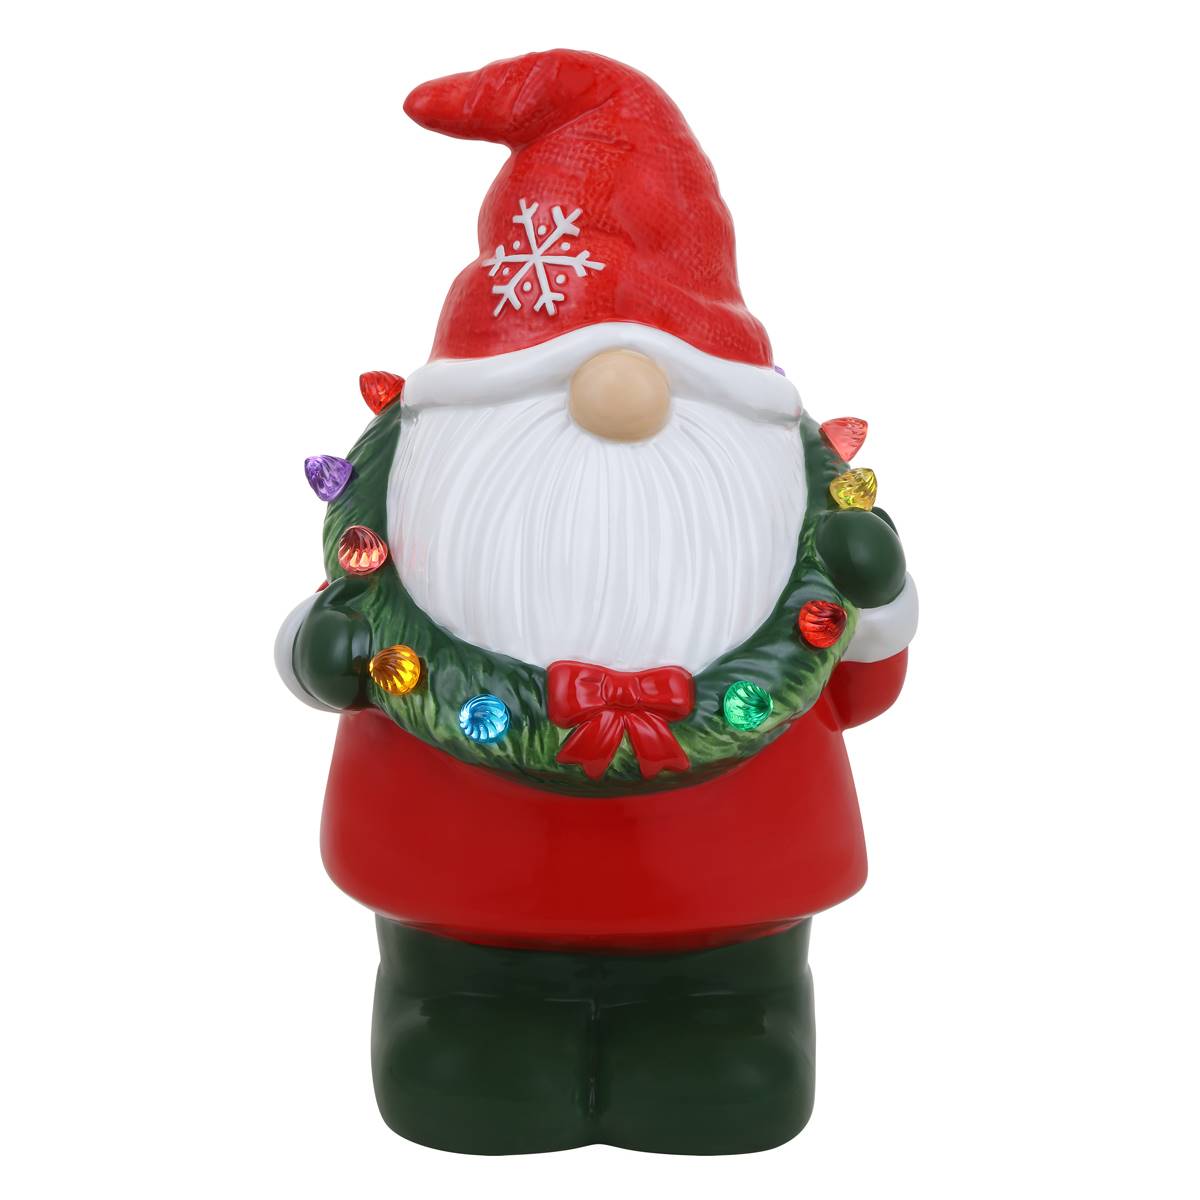 Mr. Christmas 12in. Nostalgic Ceramic Gnome With Wreath